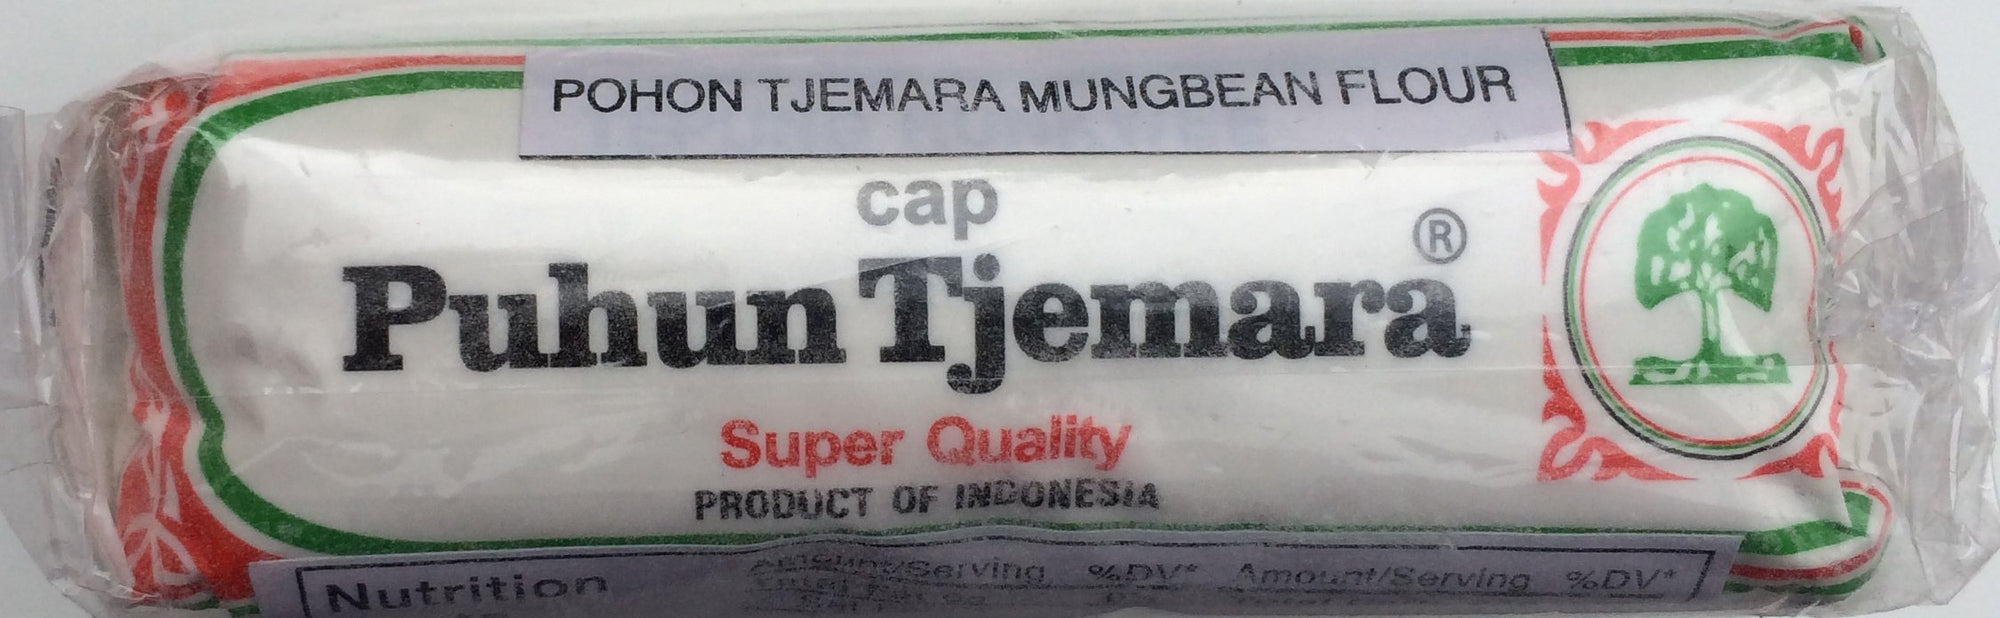 Tjemara Mungbean Flour - 3.5oz (Pack of 5) - Vanilla Flavor